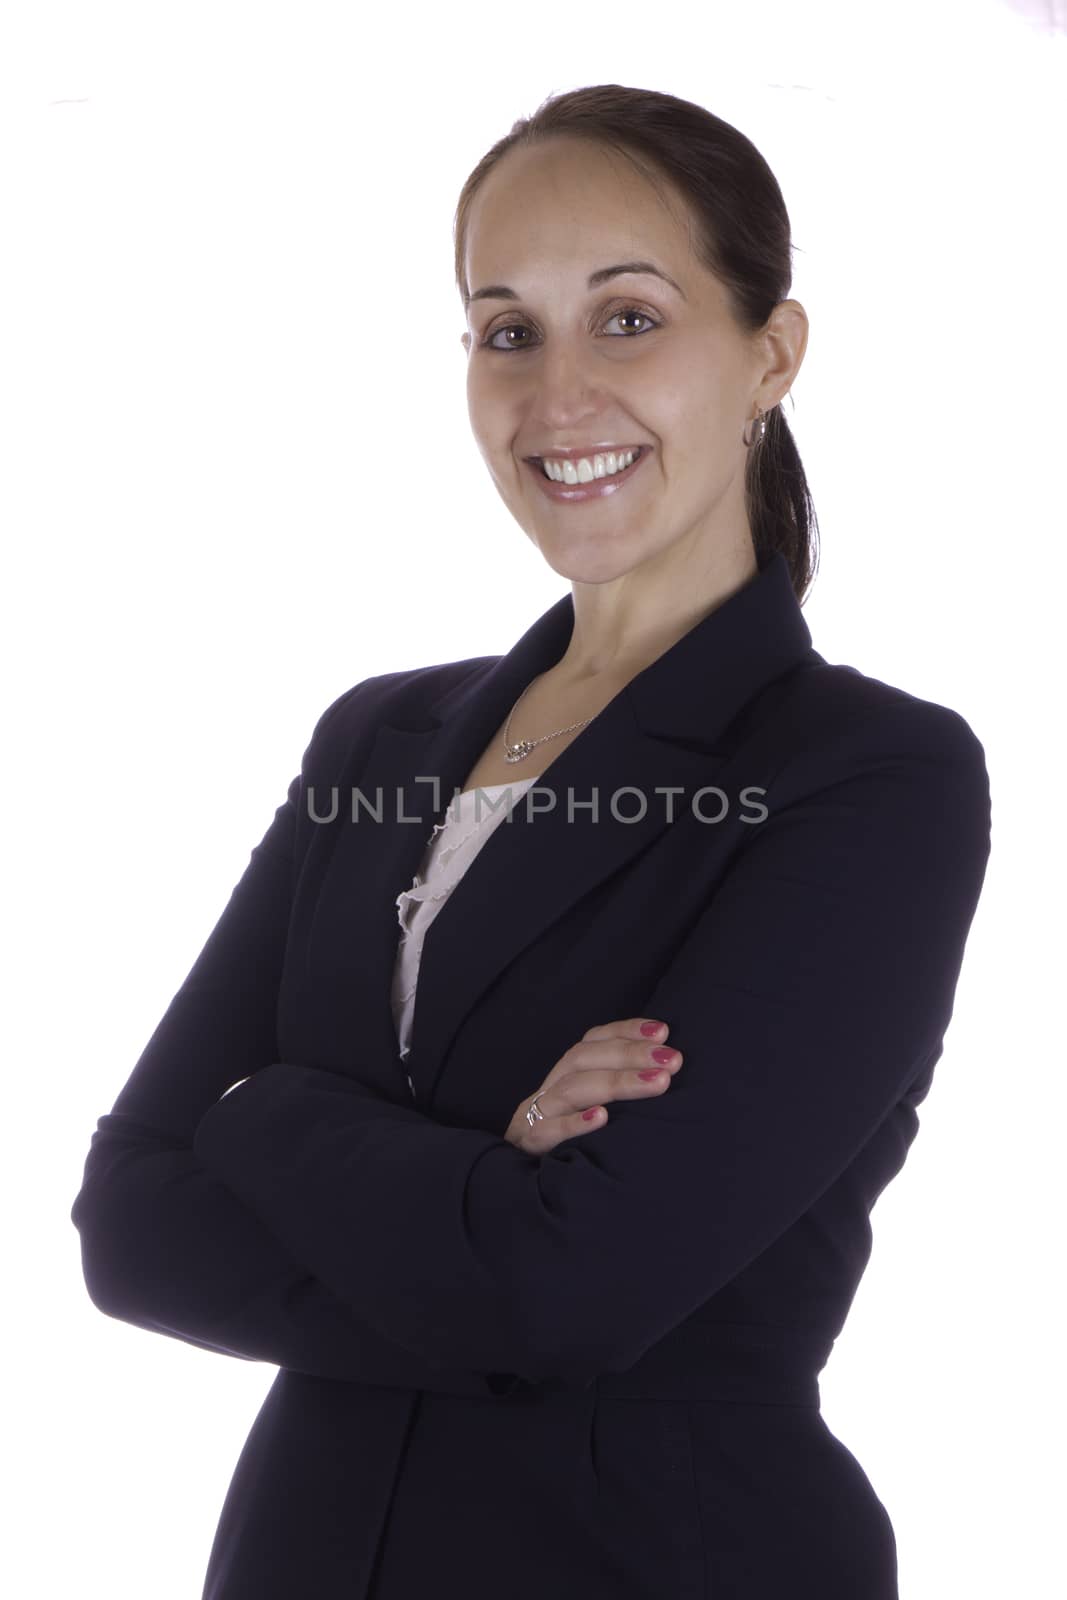 Portrait of a smiling business woman